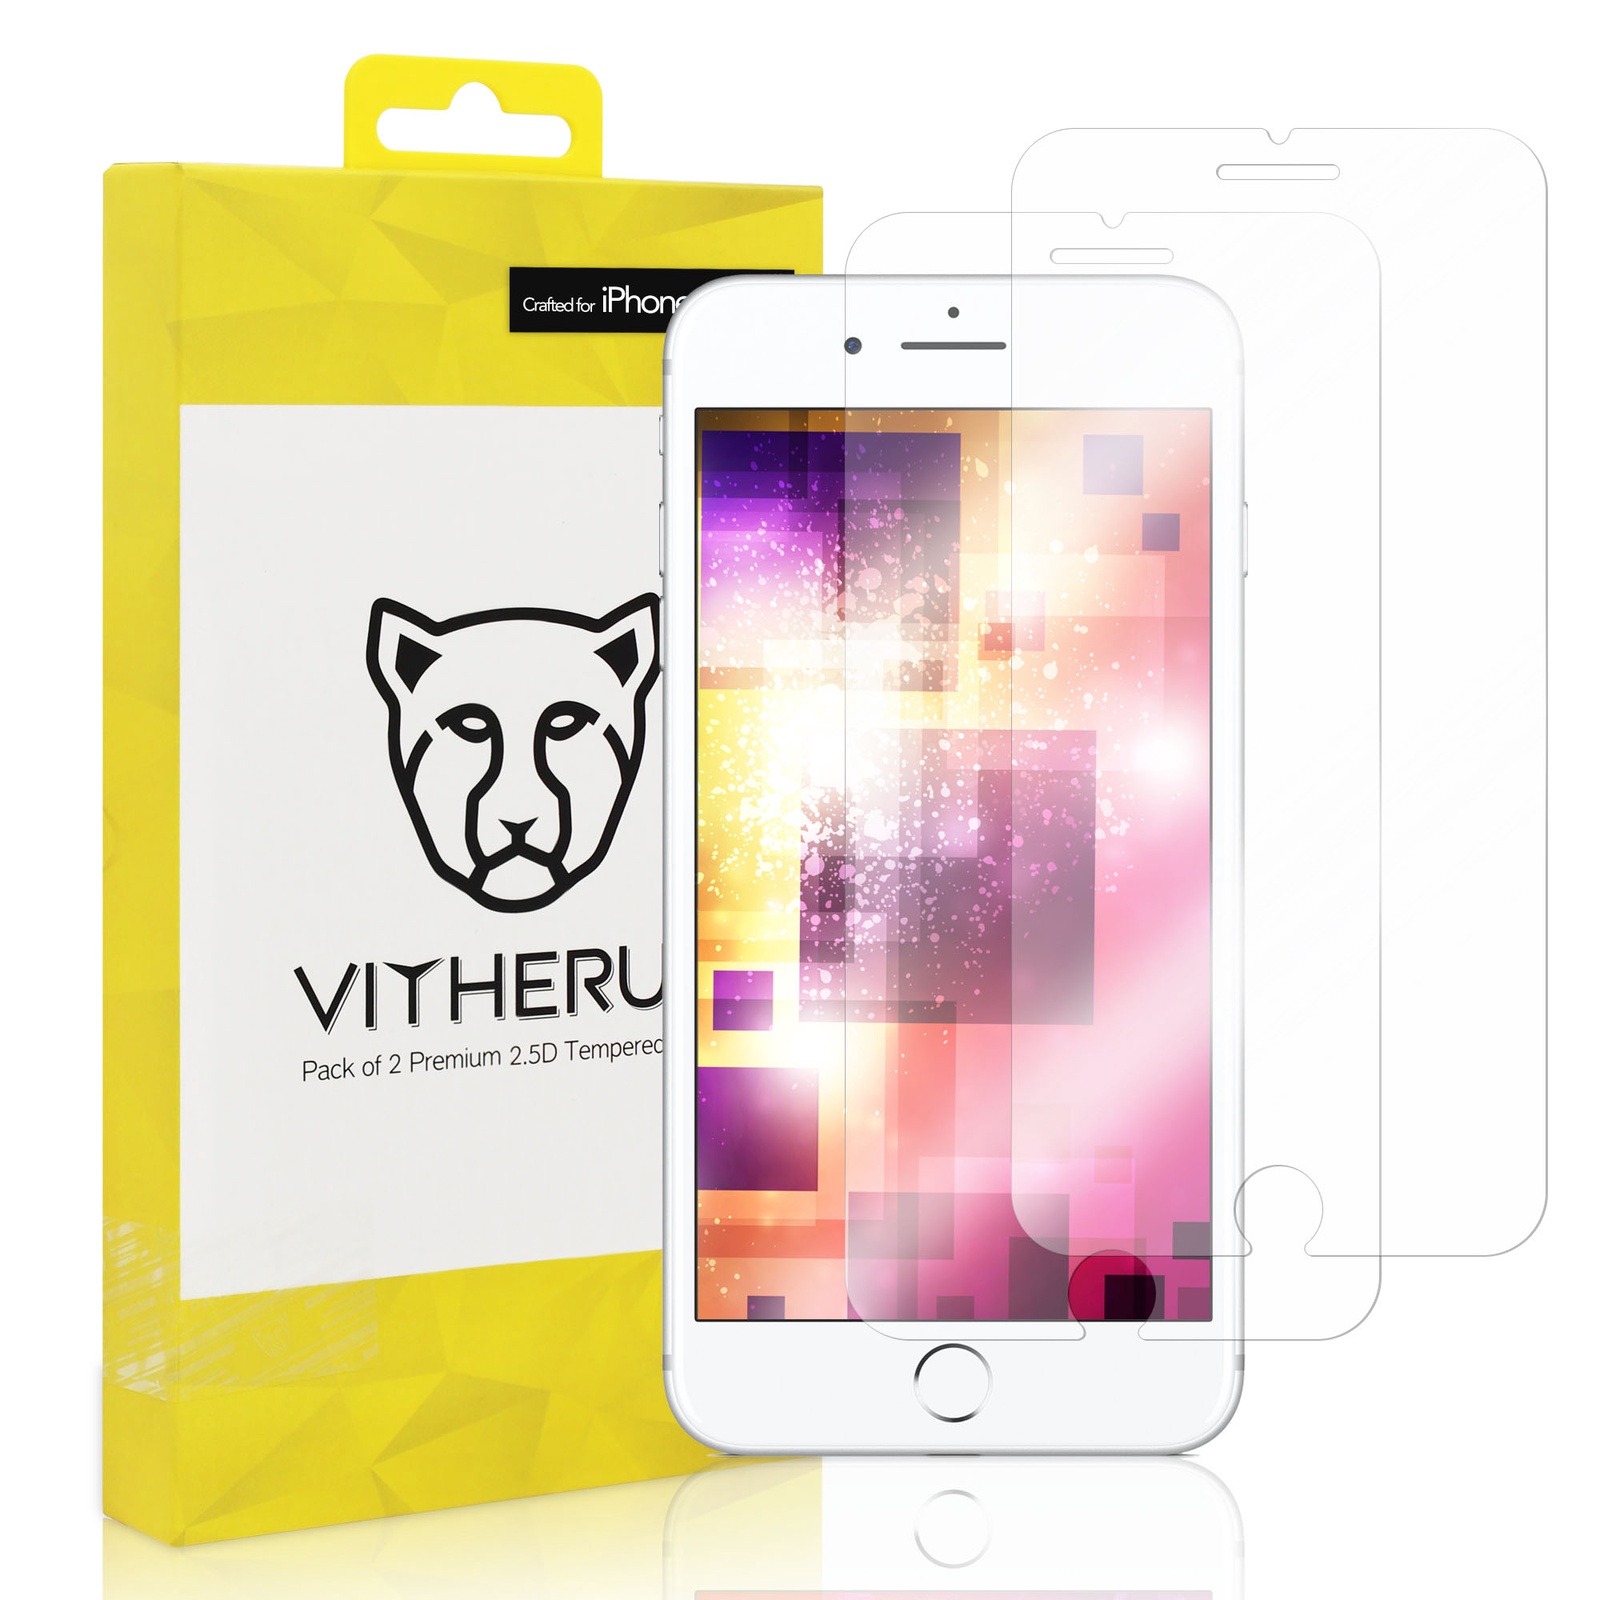 фото Защитное стекло VITHERUM GOLD Premium 2.5D Tempered Glass для iPhone 8+/7+ - (VTHGLD0002)